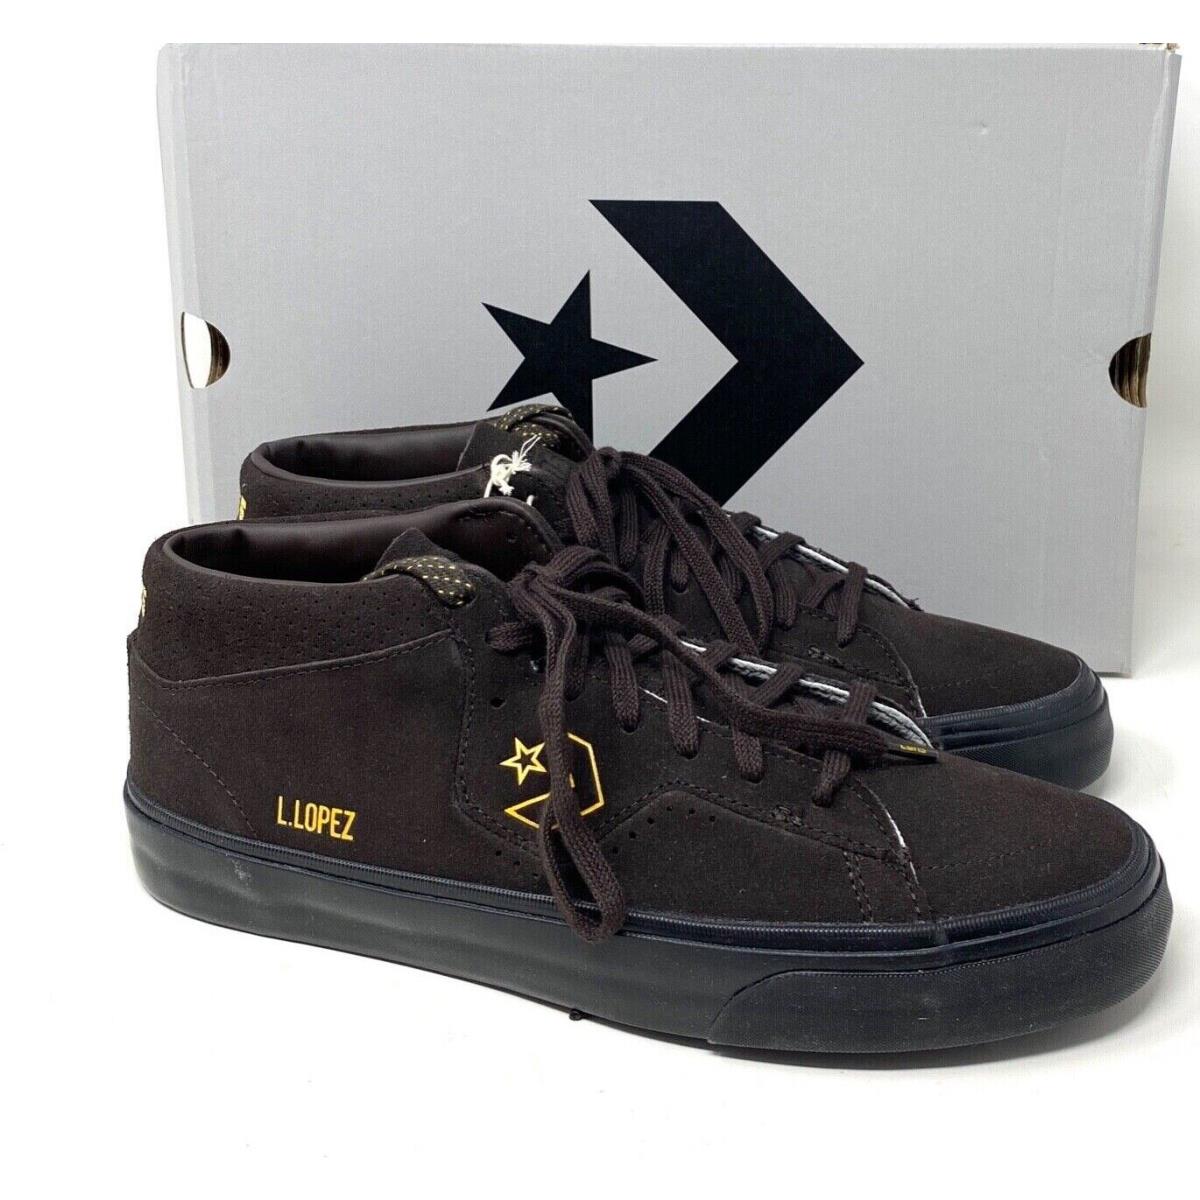 Converse Louie Lopez Pro Shoes Mid Top Brown Suede Women`s Size Sneakers A01247C